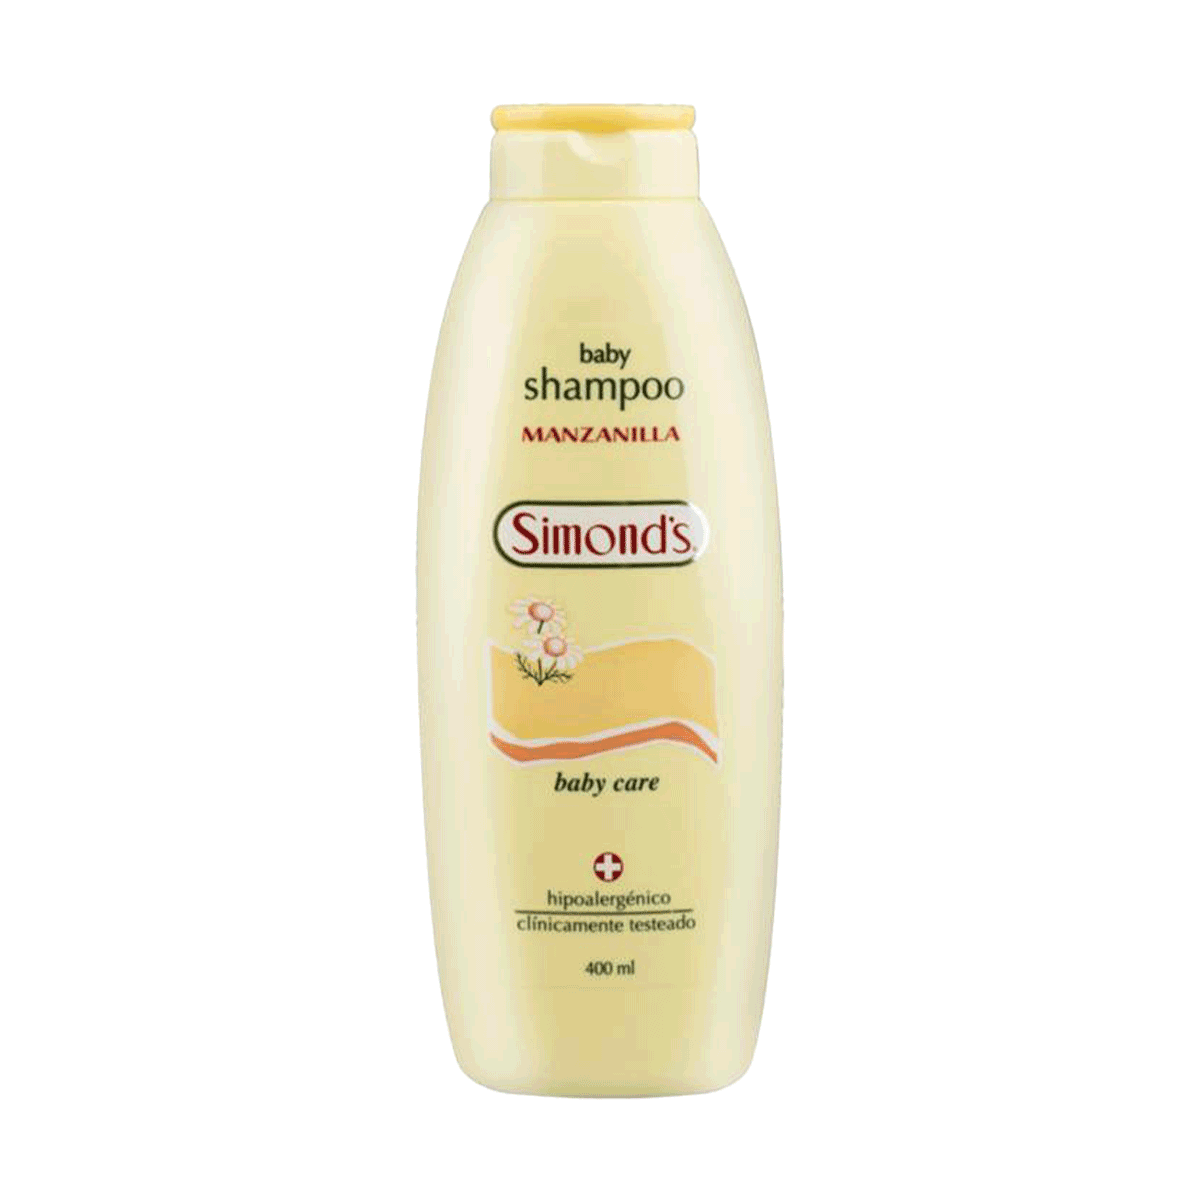 Shampoo baby care Manzanilla Simonds 400 ml